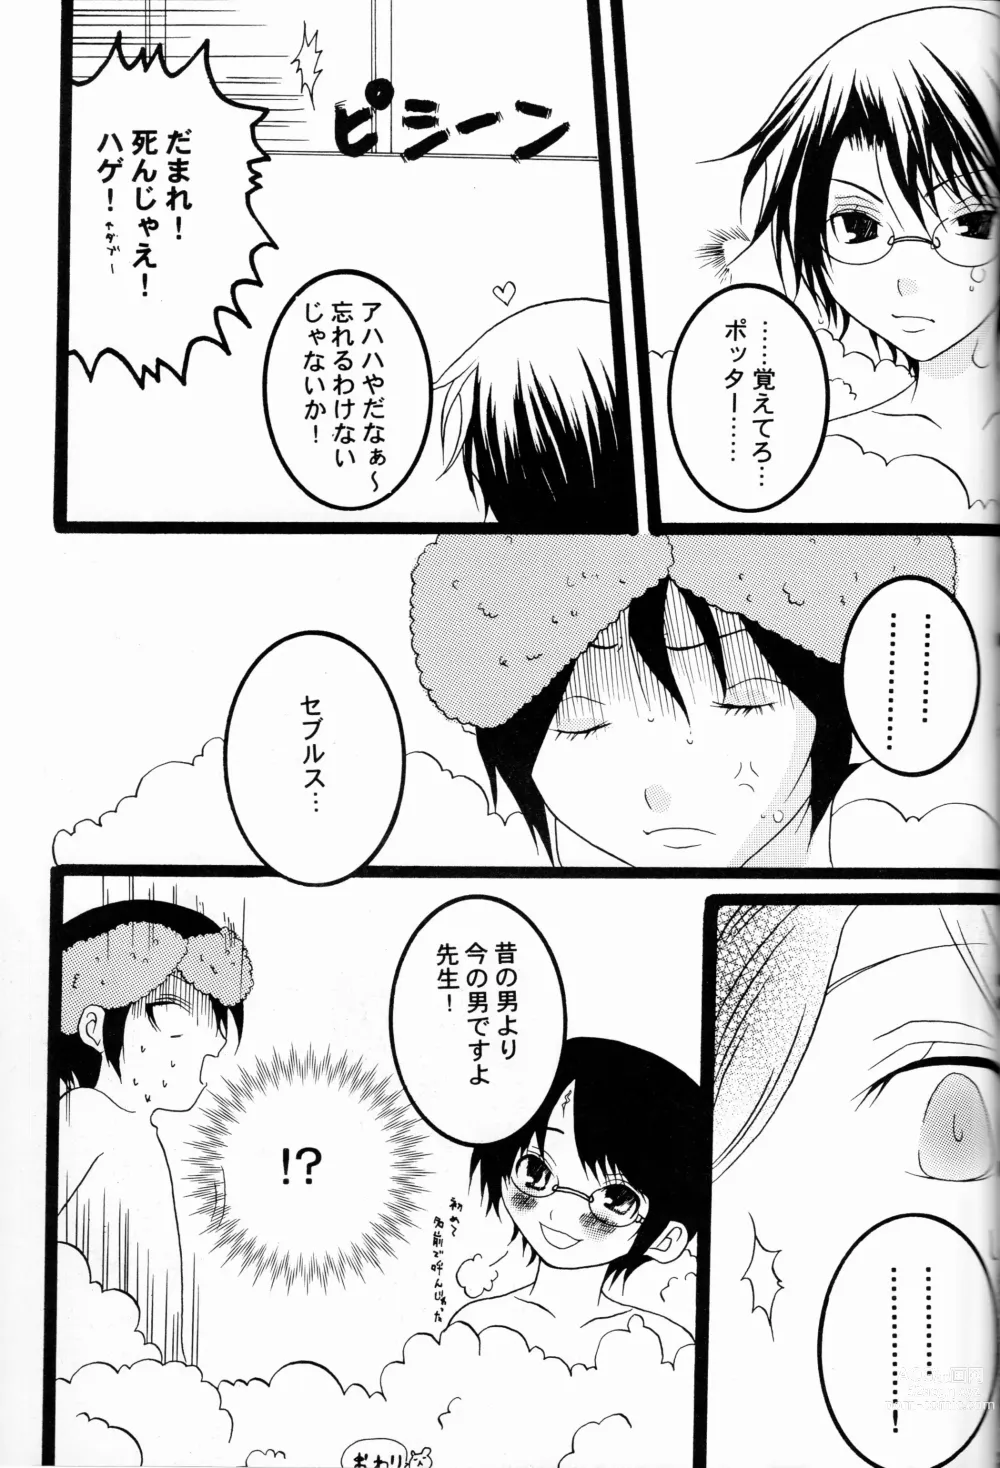 Page 30 of doujinshi 44